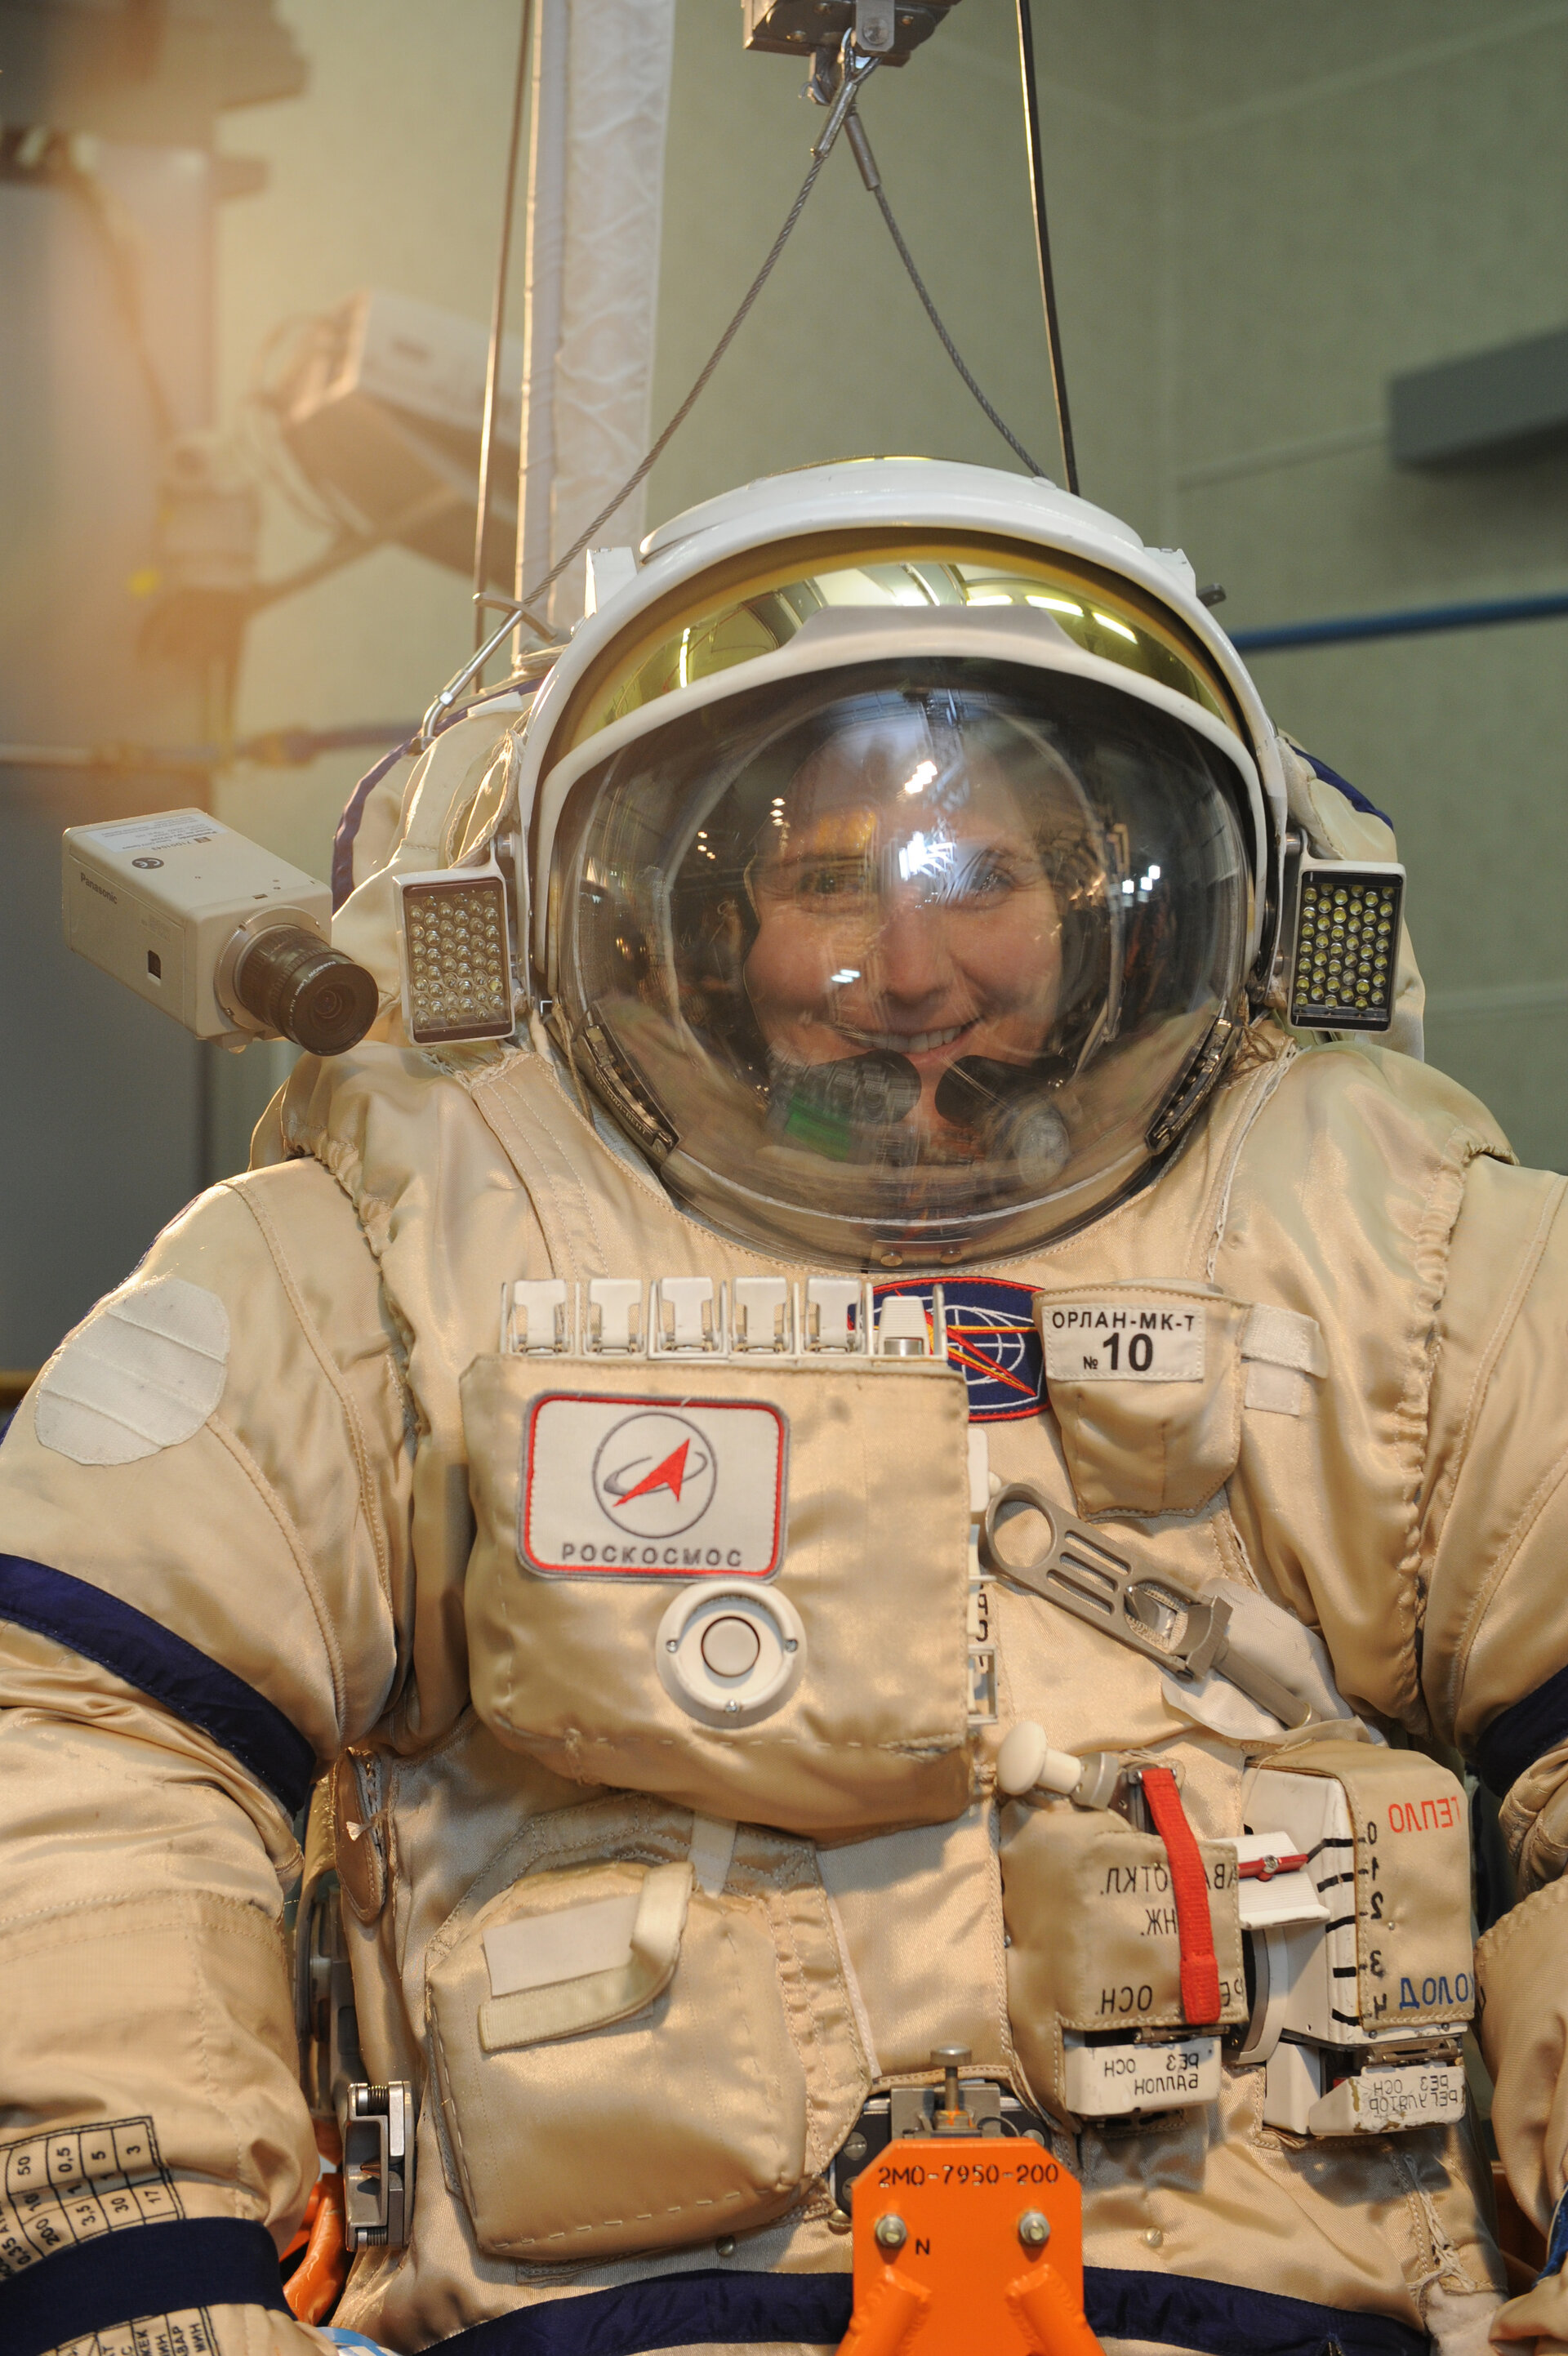 Samantha spacewalk training